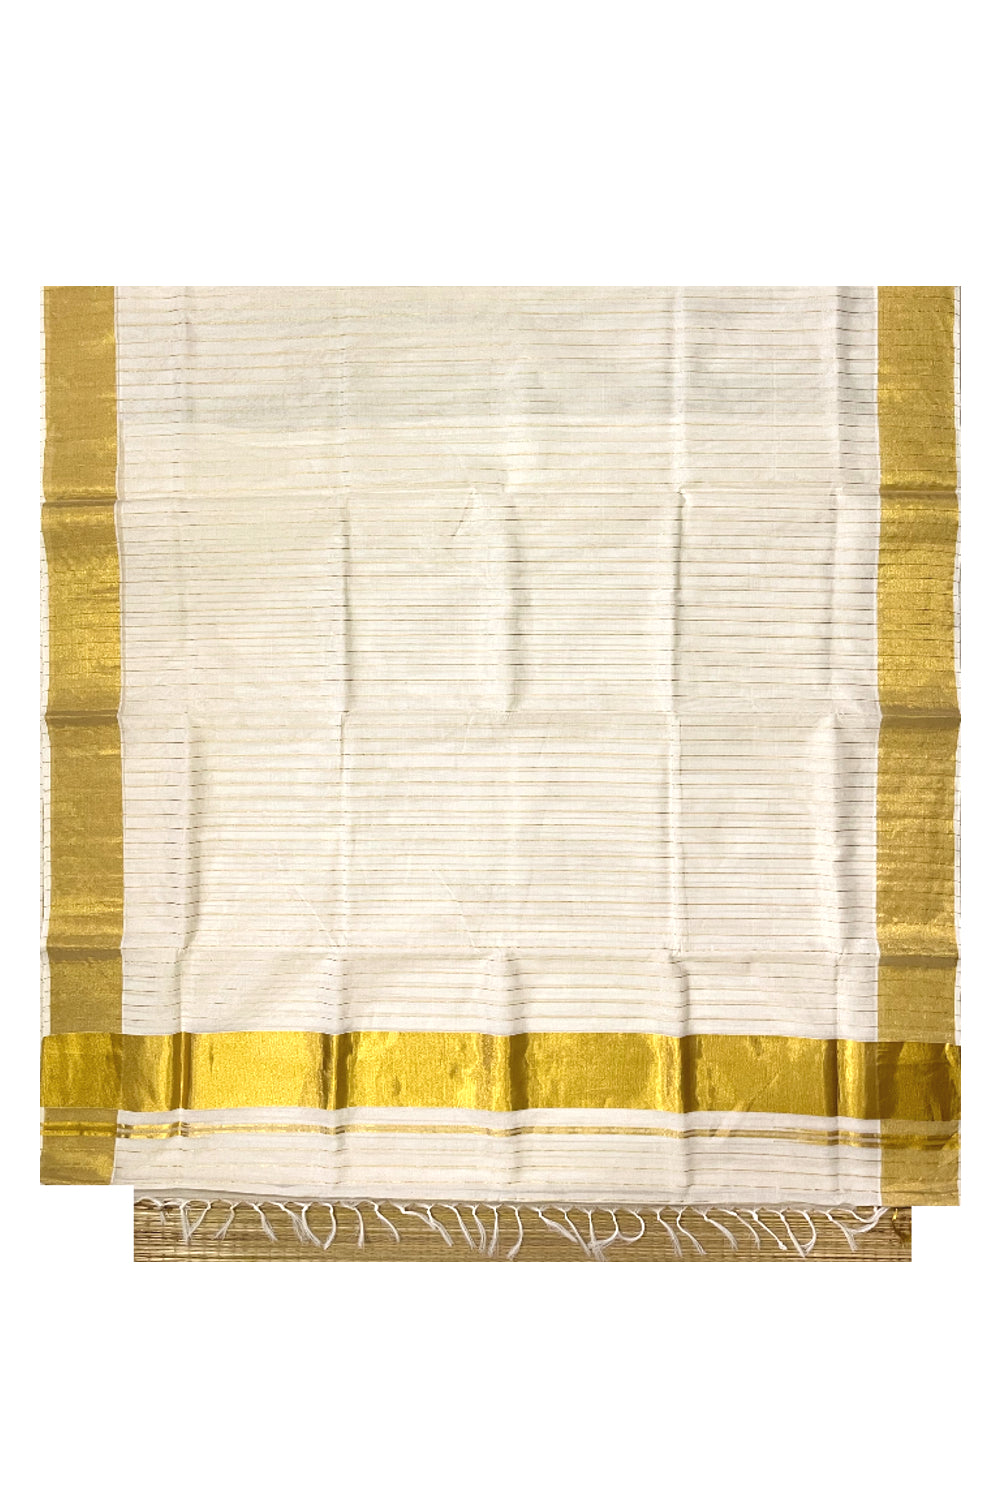 Southloom™ Handloom Premium Saree with Kasavu Lines Across Body and 4 inch Border